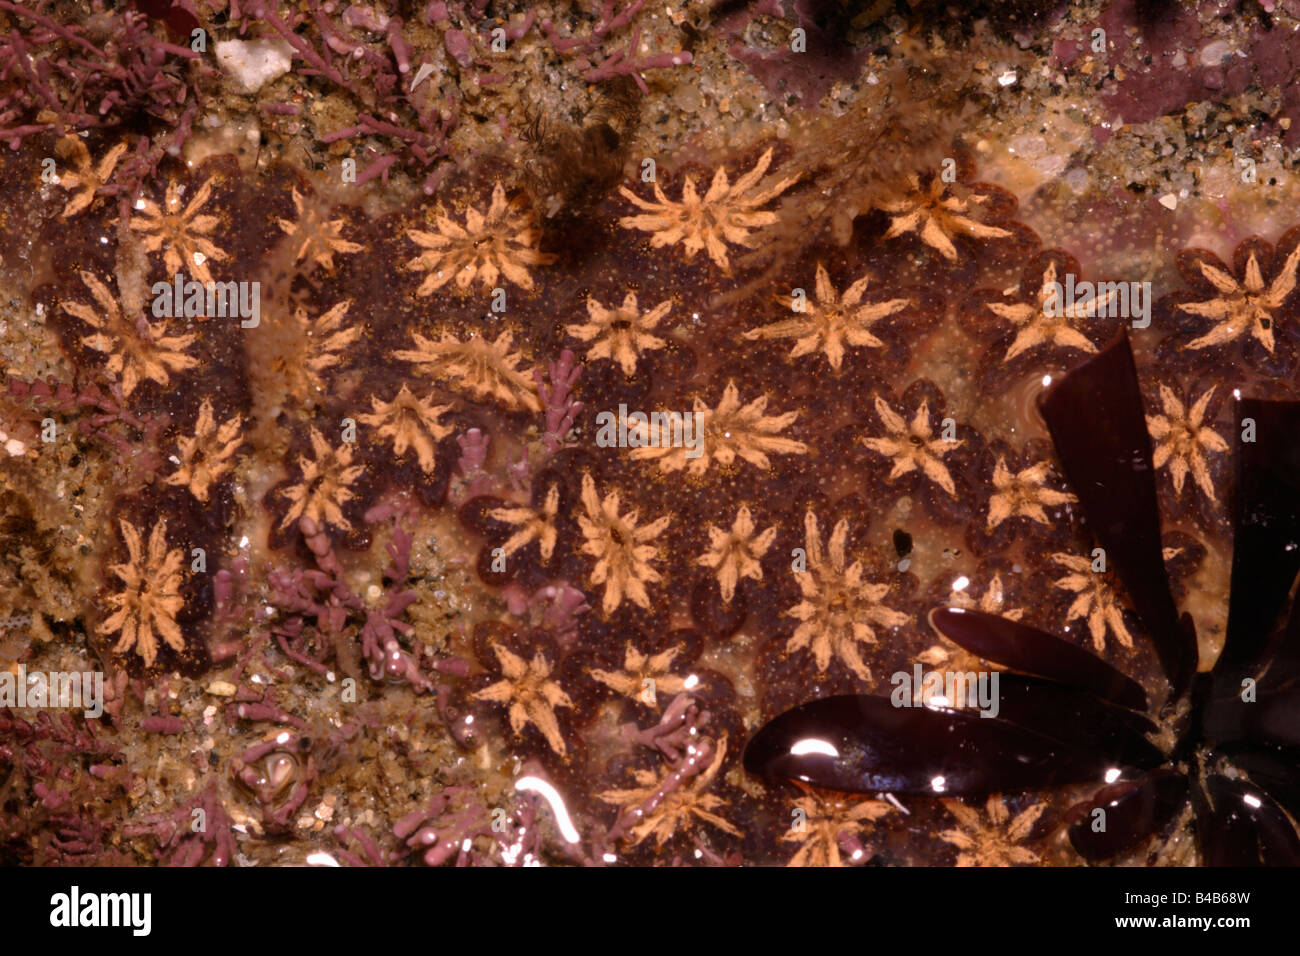 Golden star tunicate Botryllus schlosseri star ascidian star sea squirt UK Stock Photo